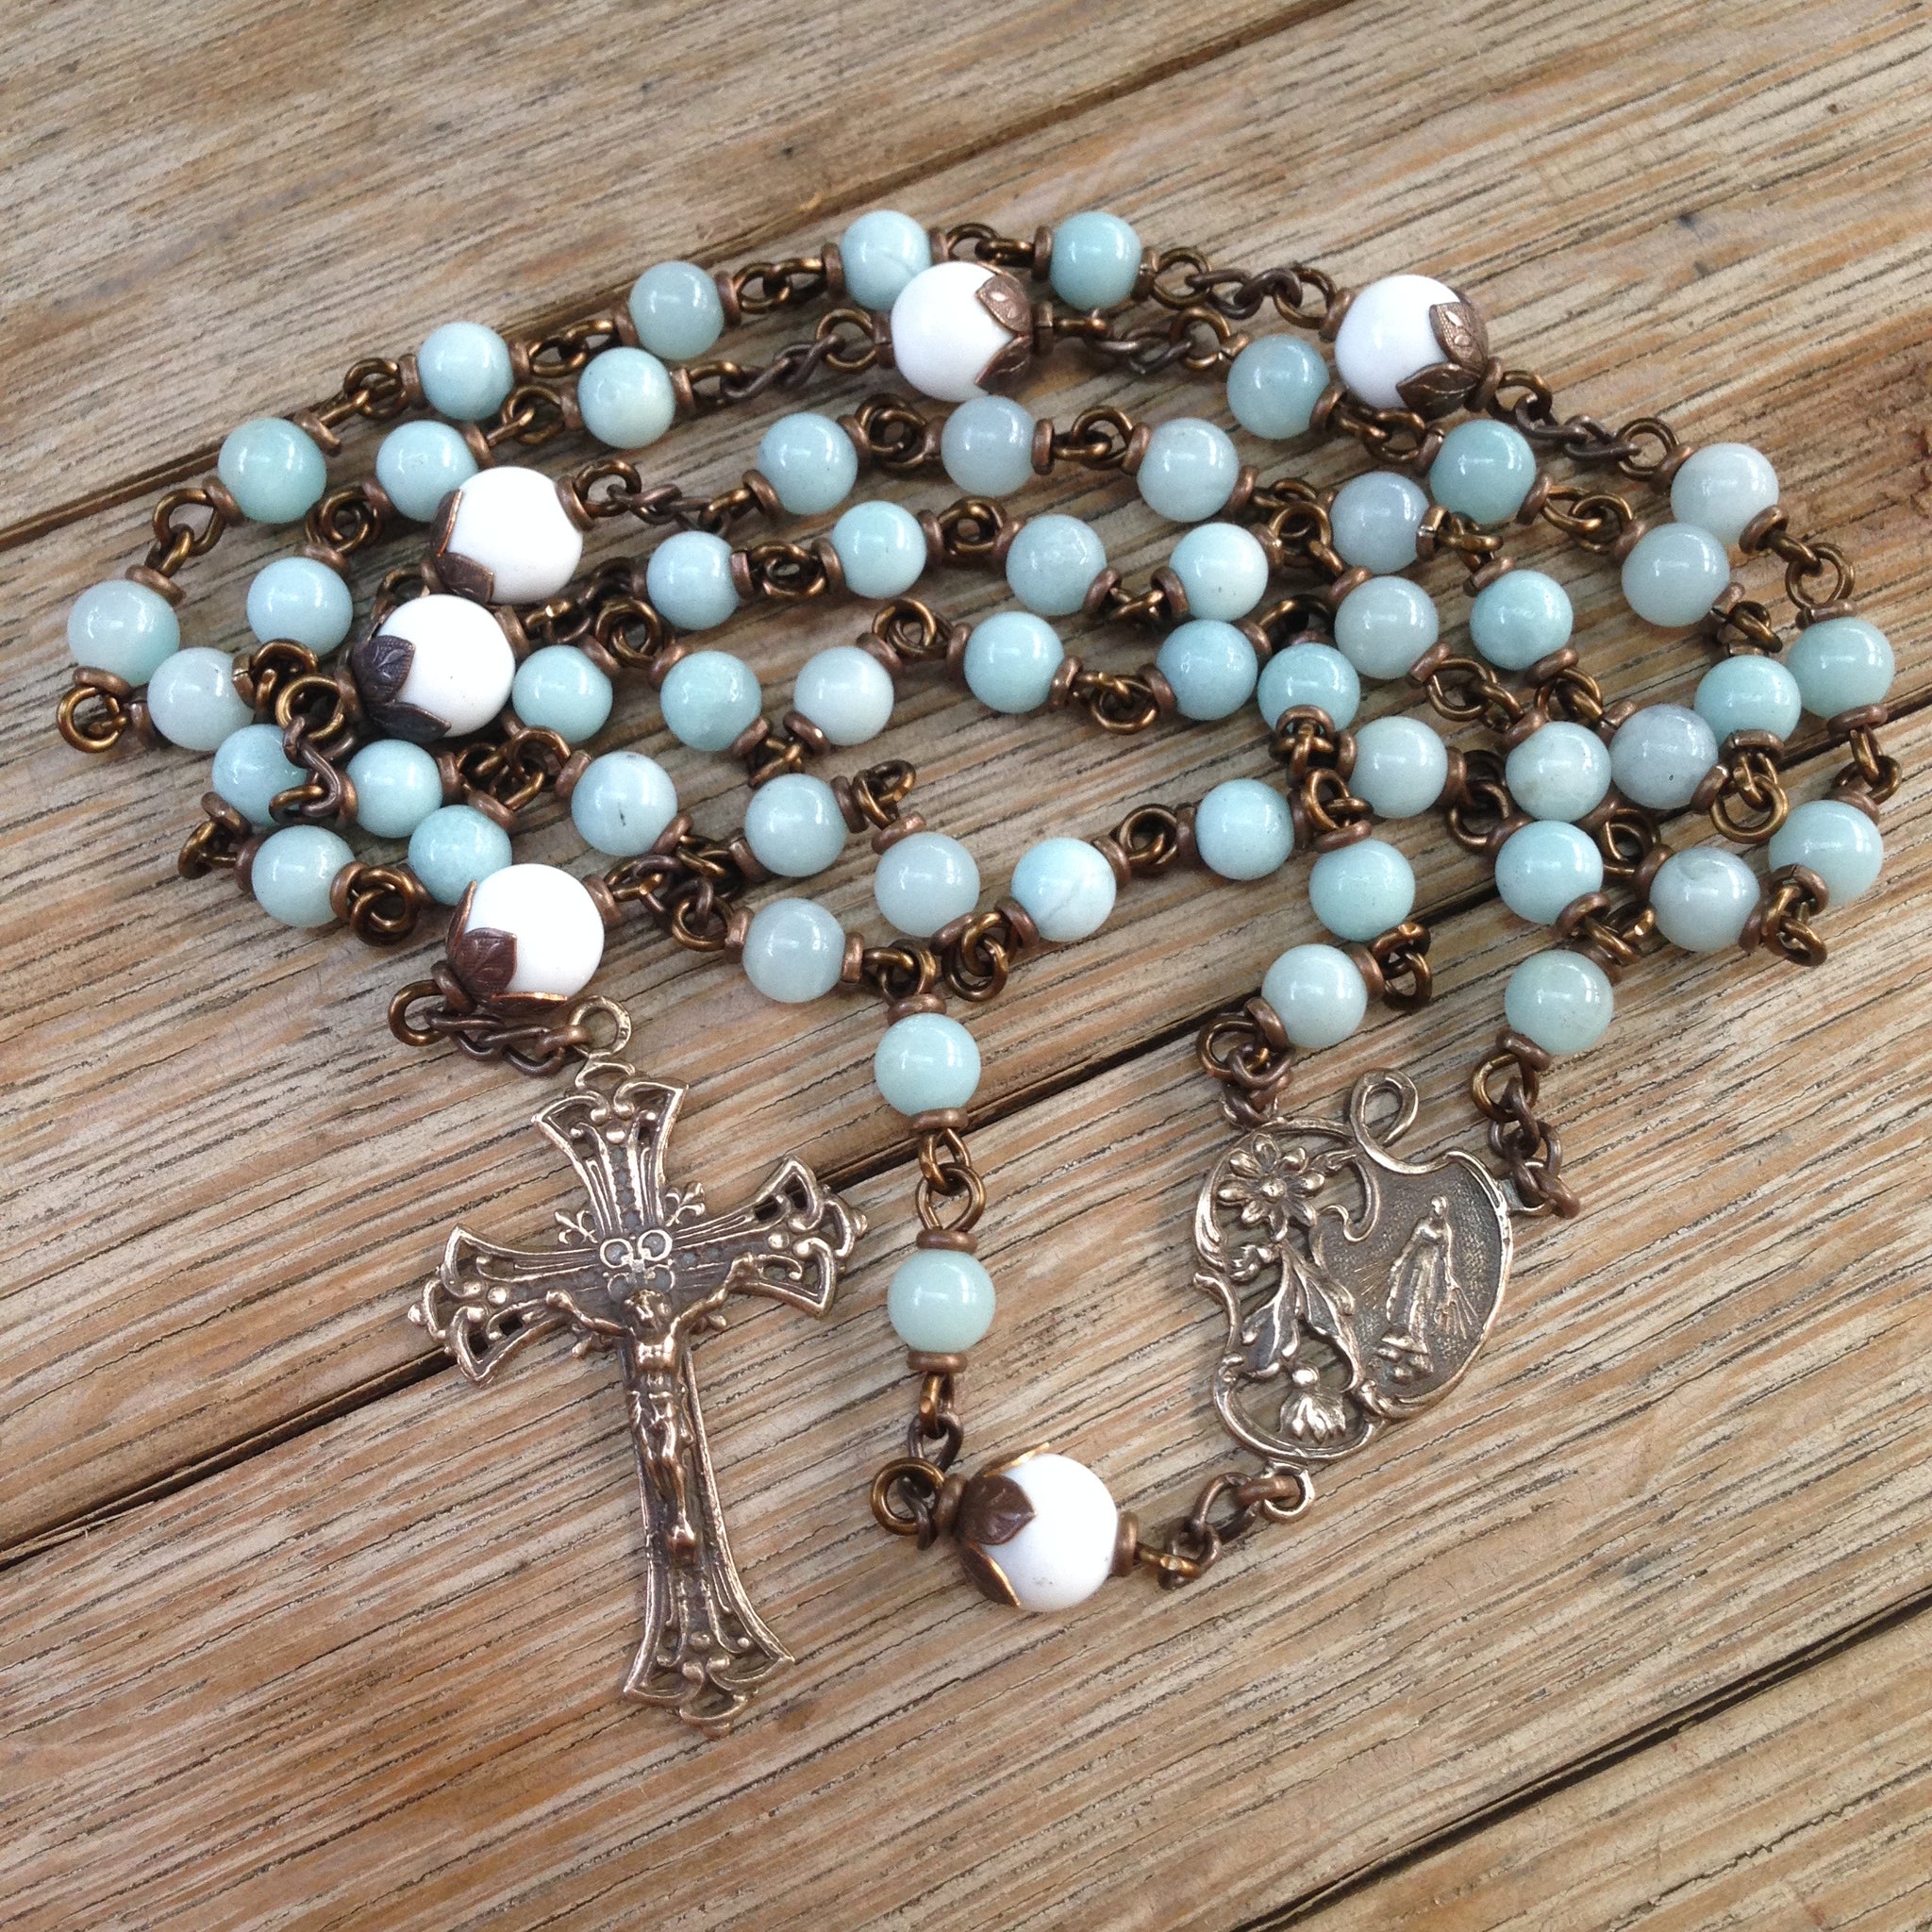 Bronze Rosary made with Amazonite beads